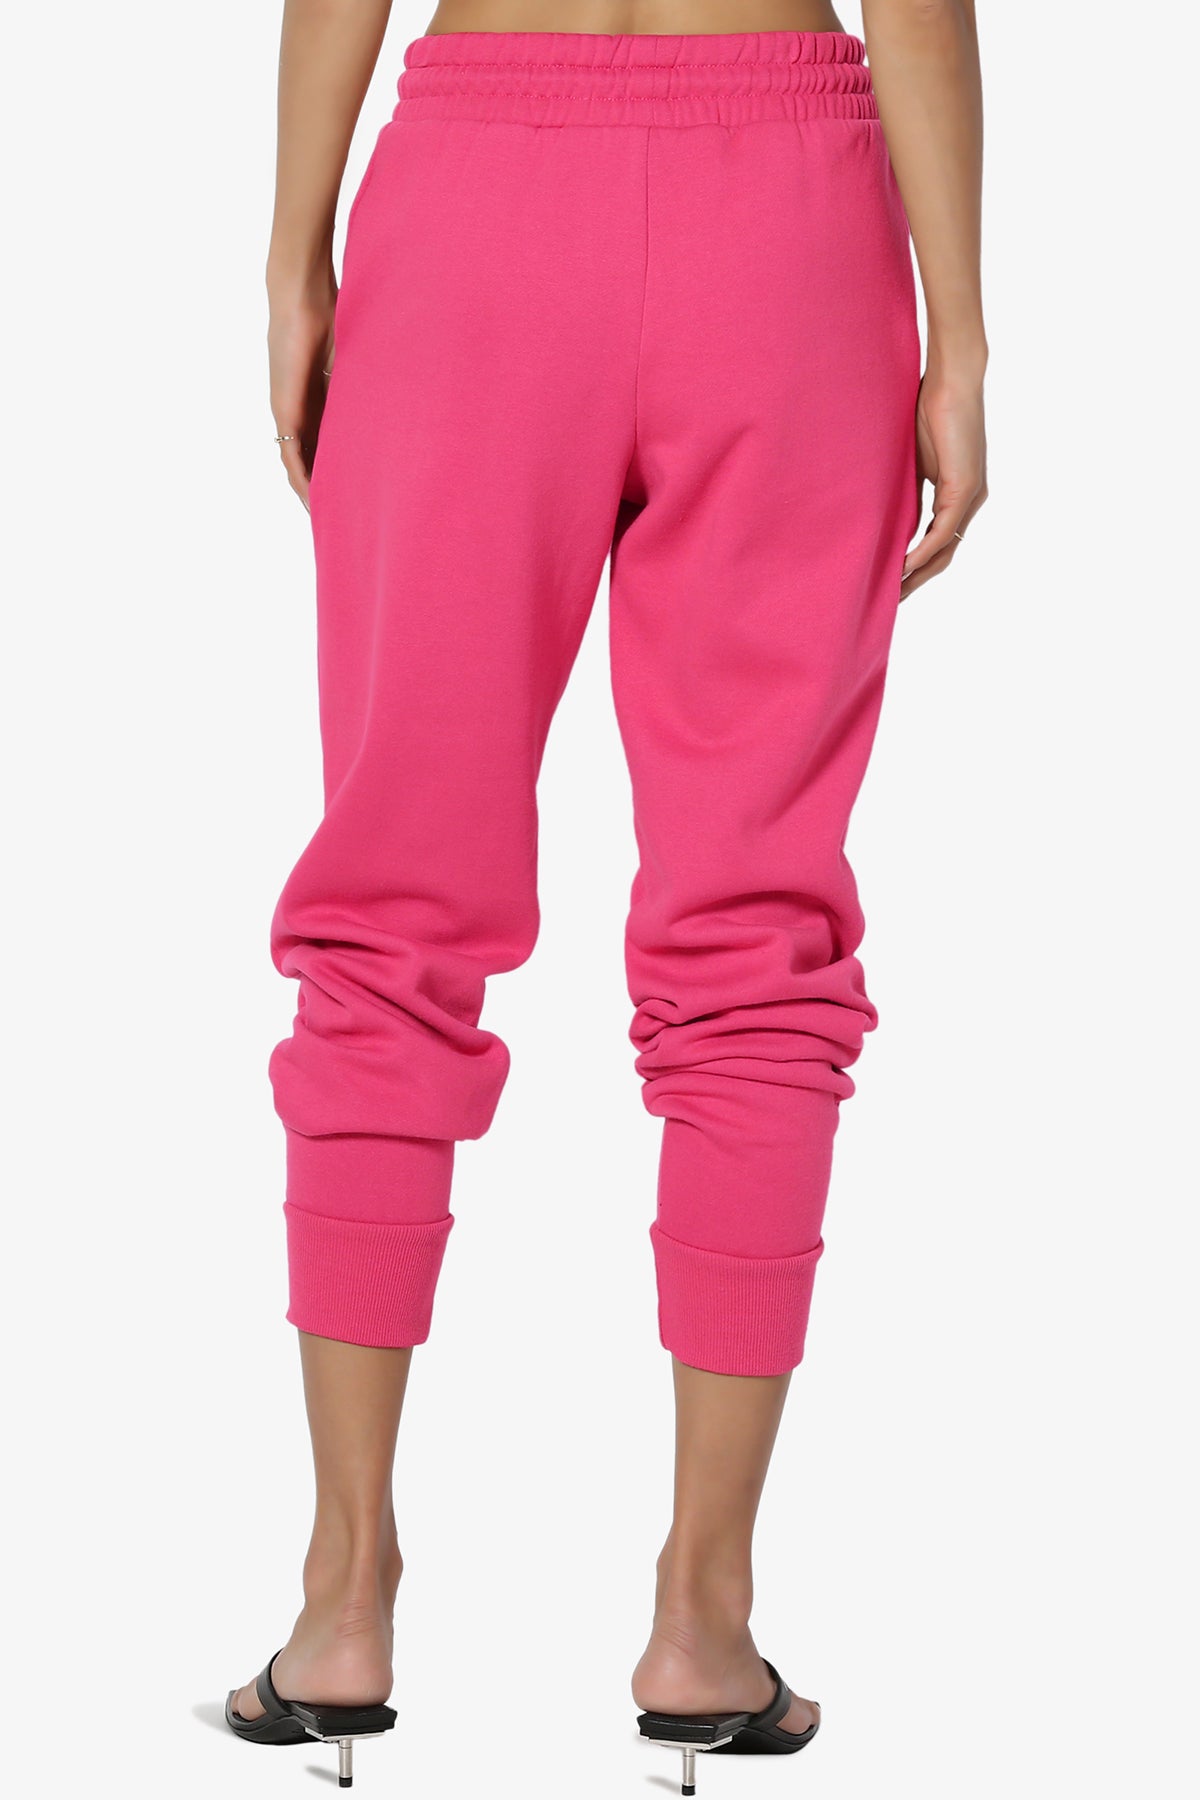 JWZUY Womens Gradient Ruining Workout Sweatpant Ankle Length Drawstrijg  Elastic Waist Pant Comfy Loose Fit Fall Pants Hot Pink XL 